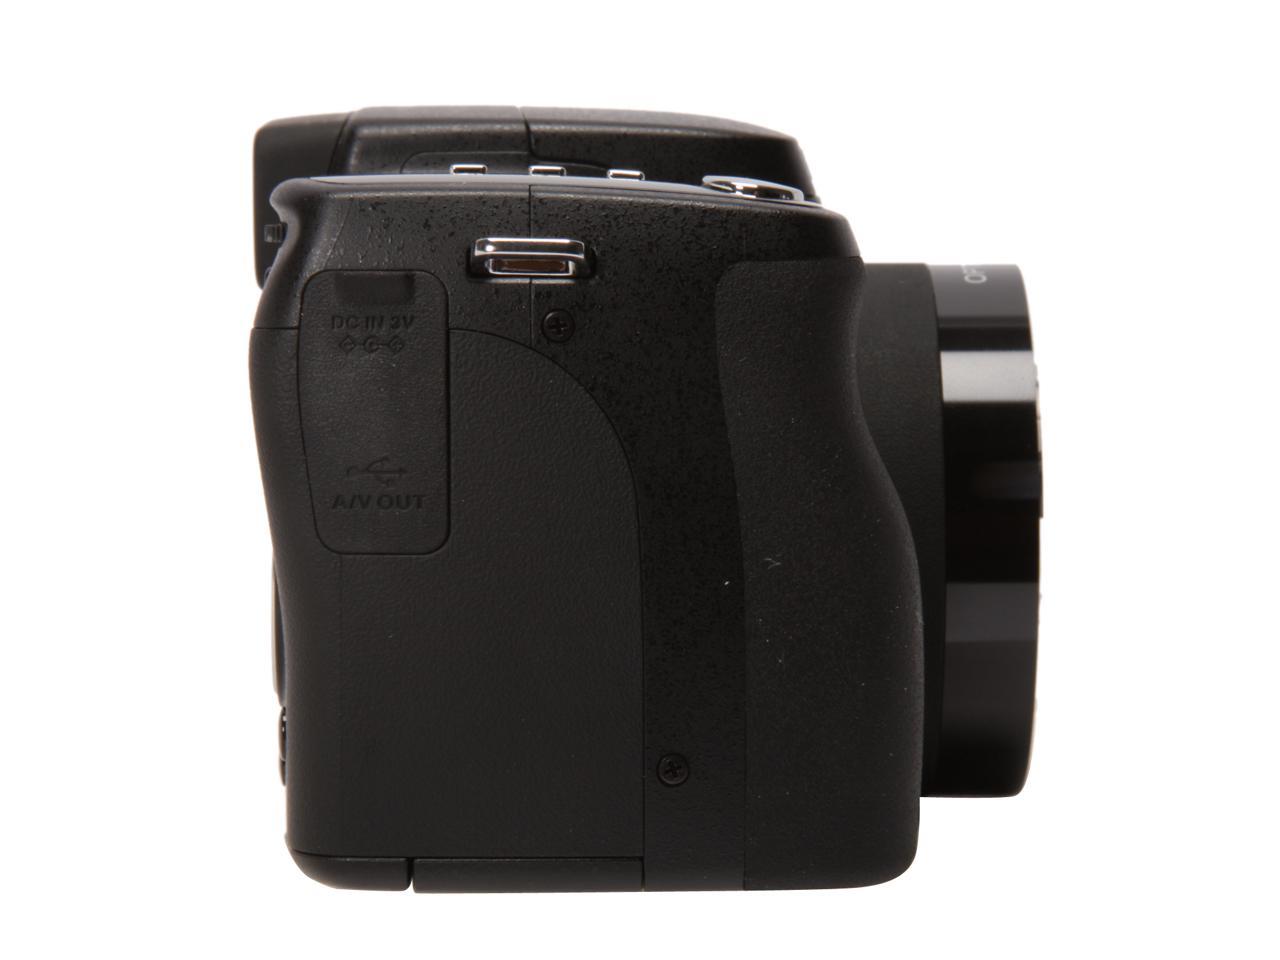 Kodak EasyShare Z1012 IS Black 10.1 MP Digital Camera - Newegg.com